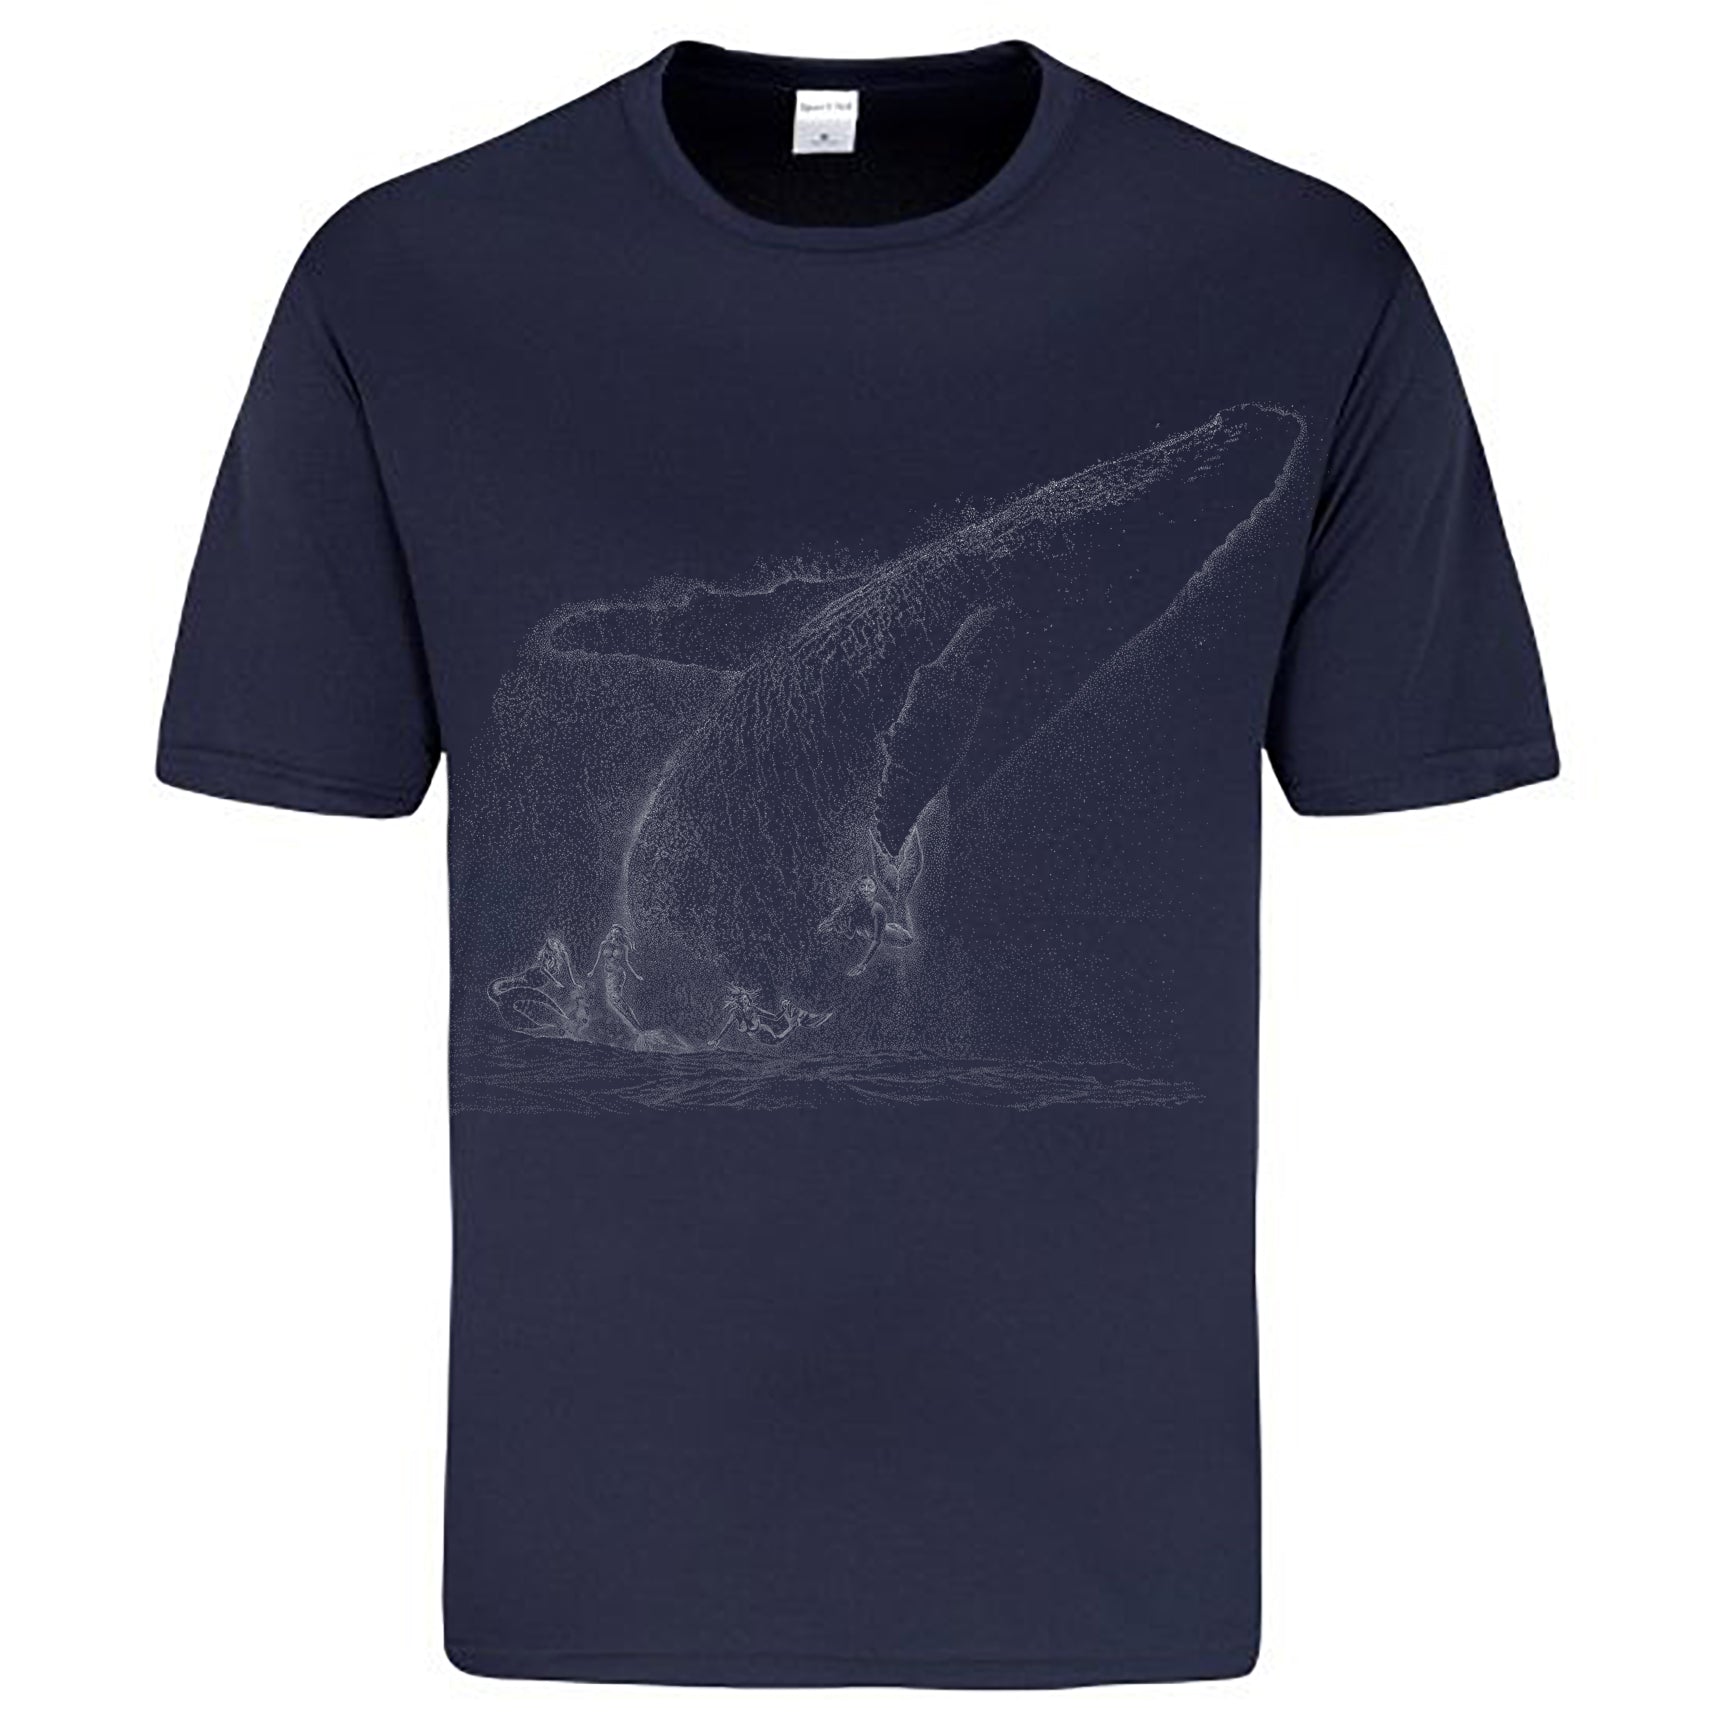 David Dory, breaching whale tee shirt